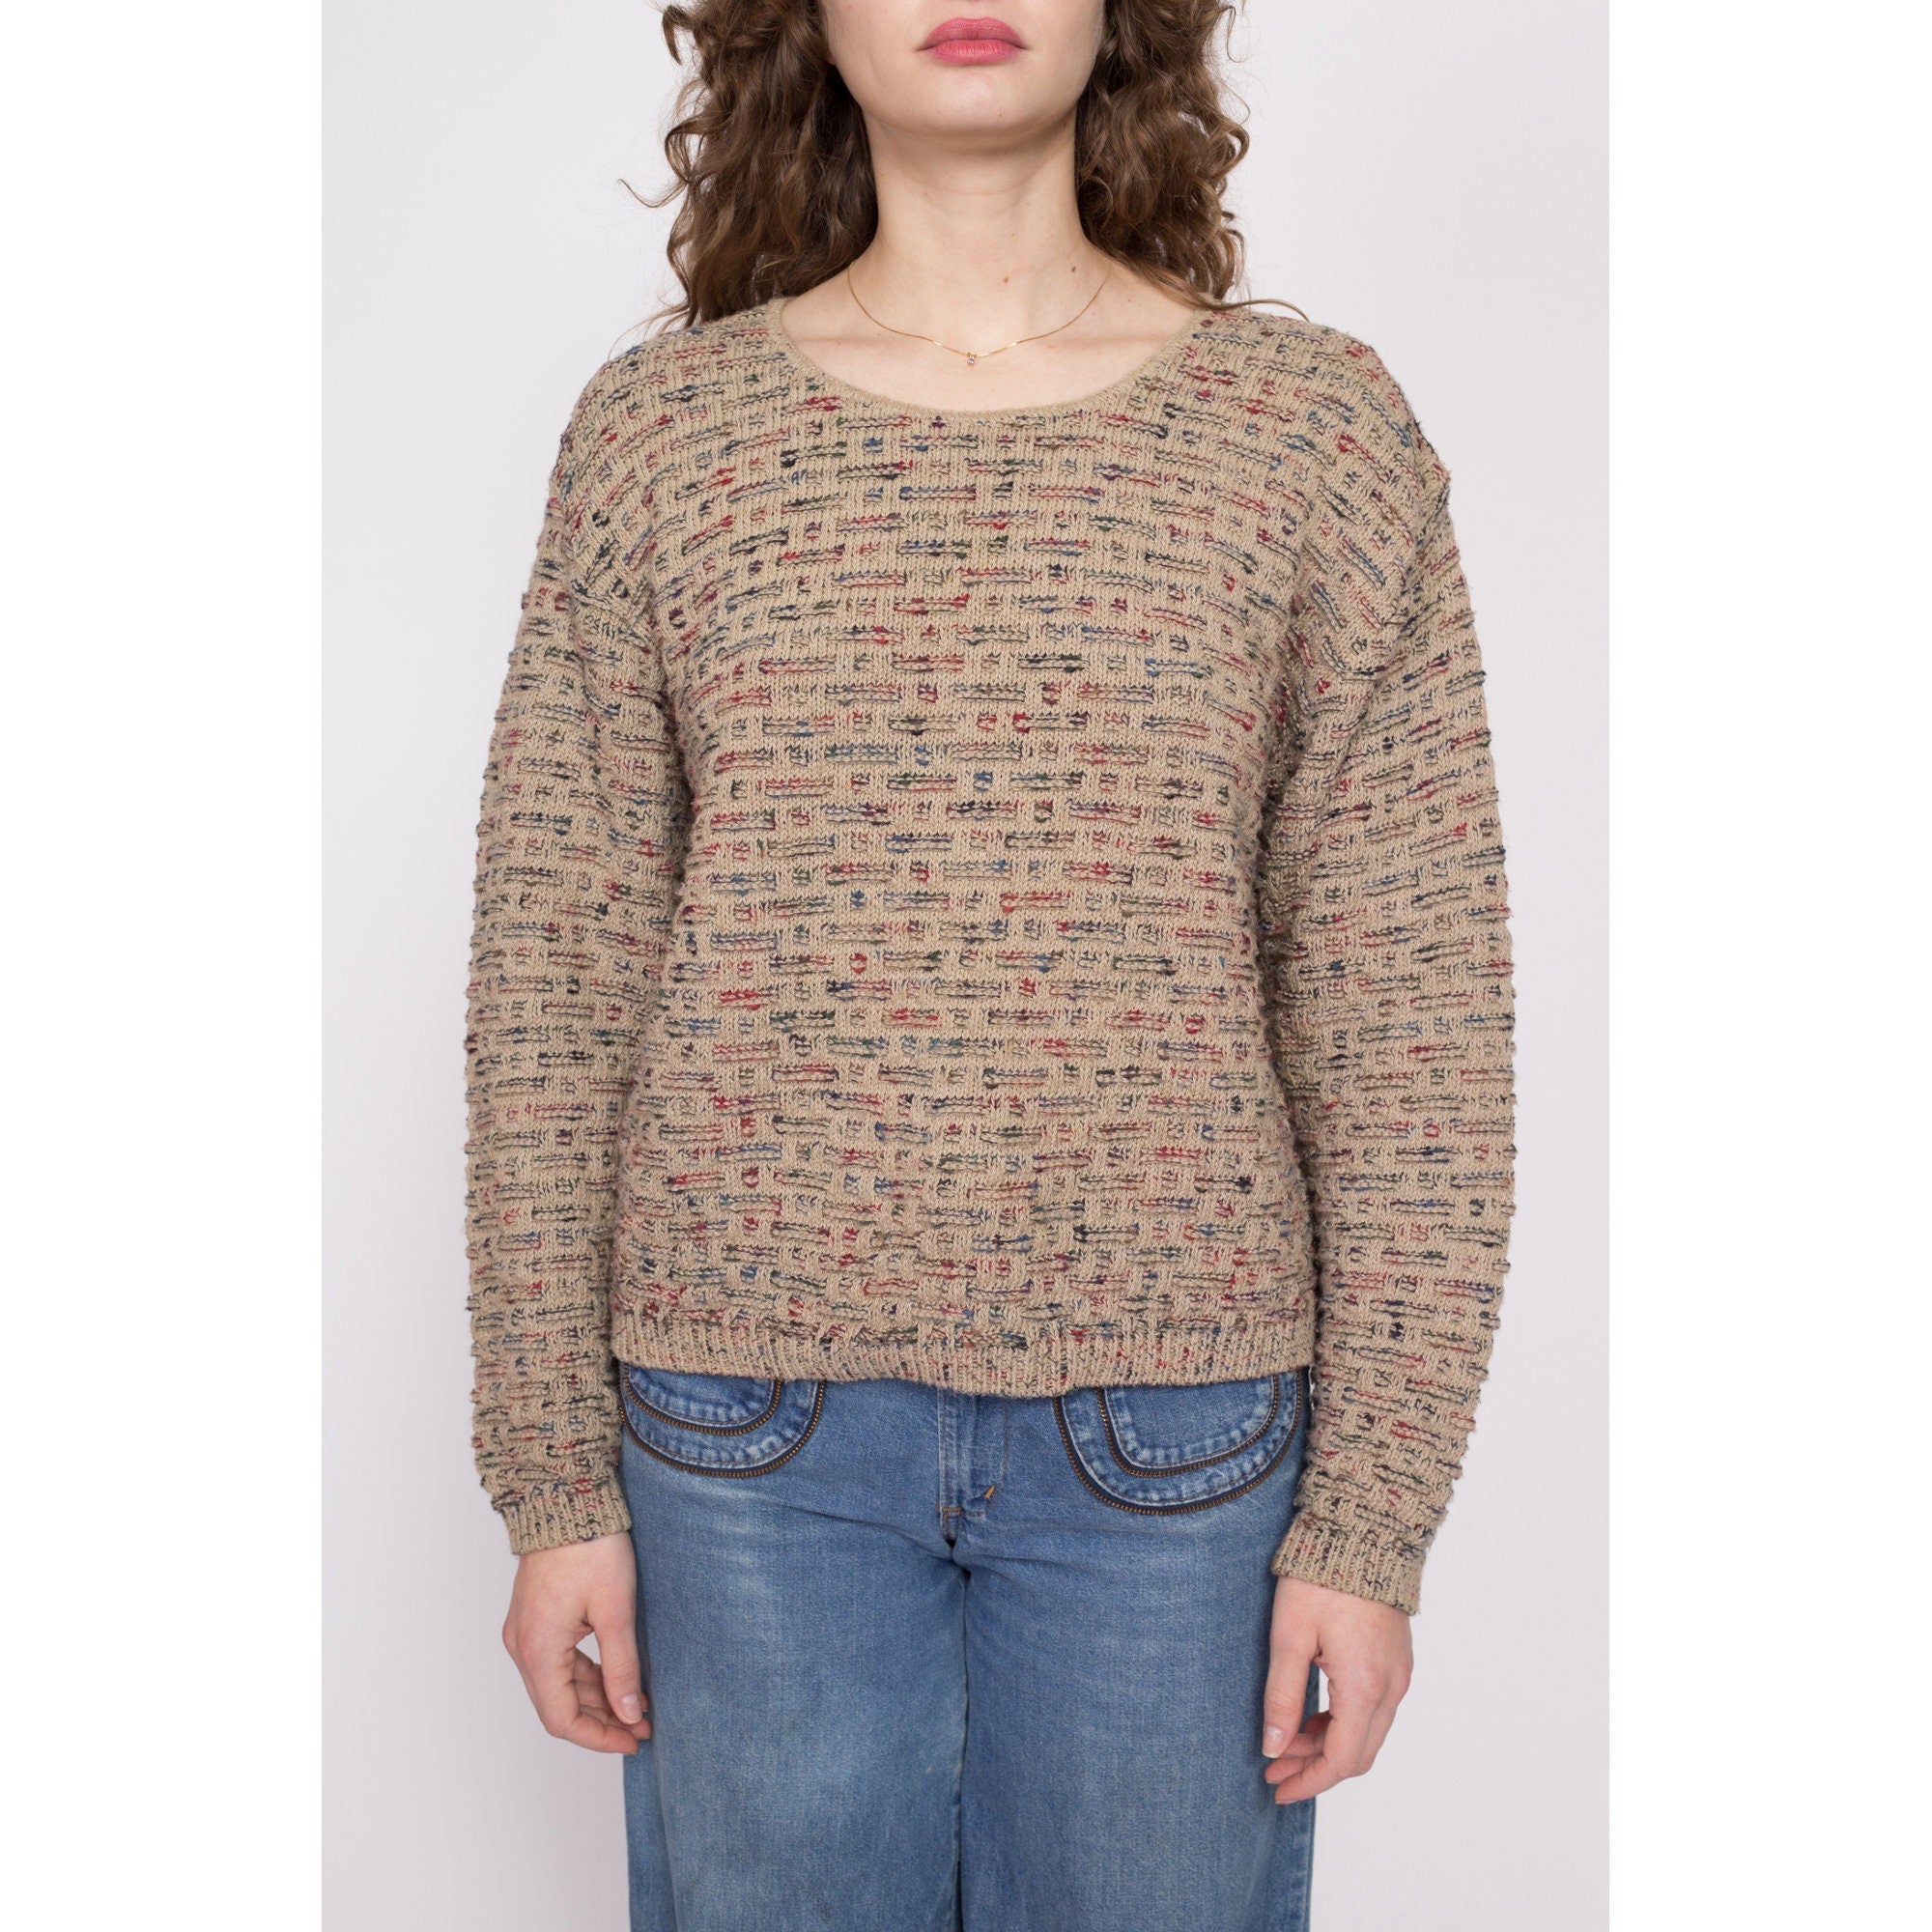 Diagonal Lace Top & Sweater - Vintage Knitting Pattern, PDF